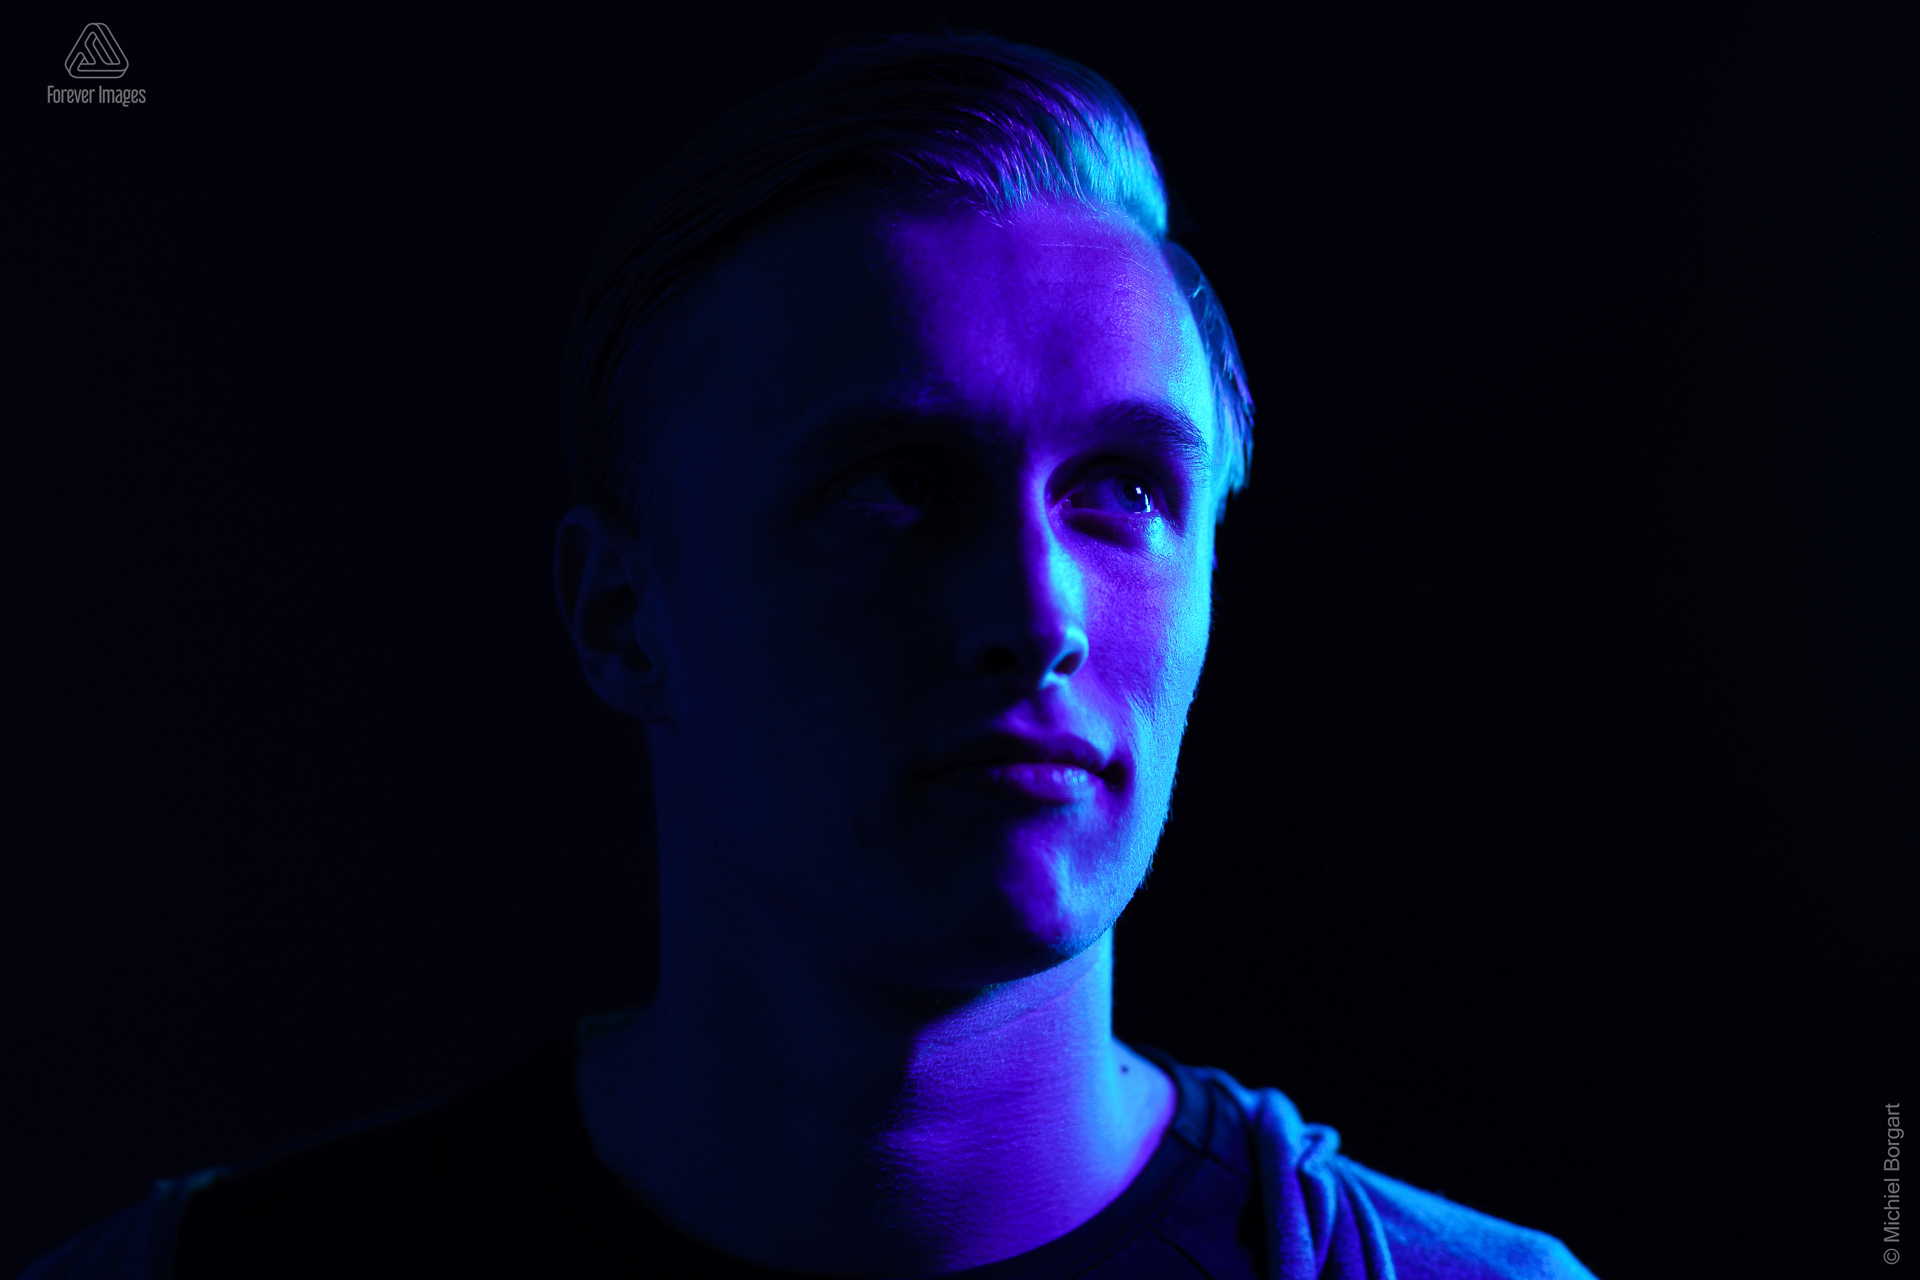 Portrait photo low key young man in studio with blue and purple light | Alex | Portrait Photographer Michiel Borgart - Forever Images.